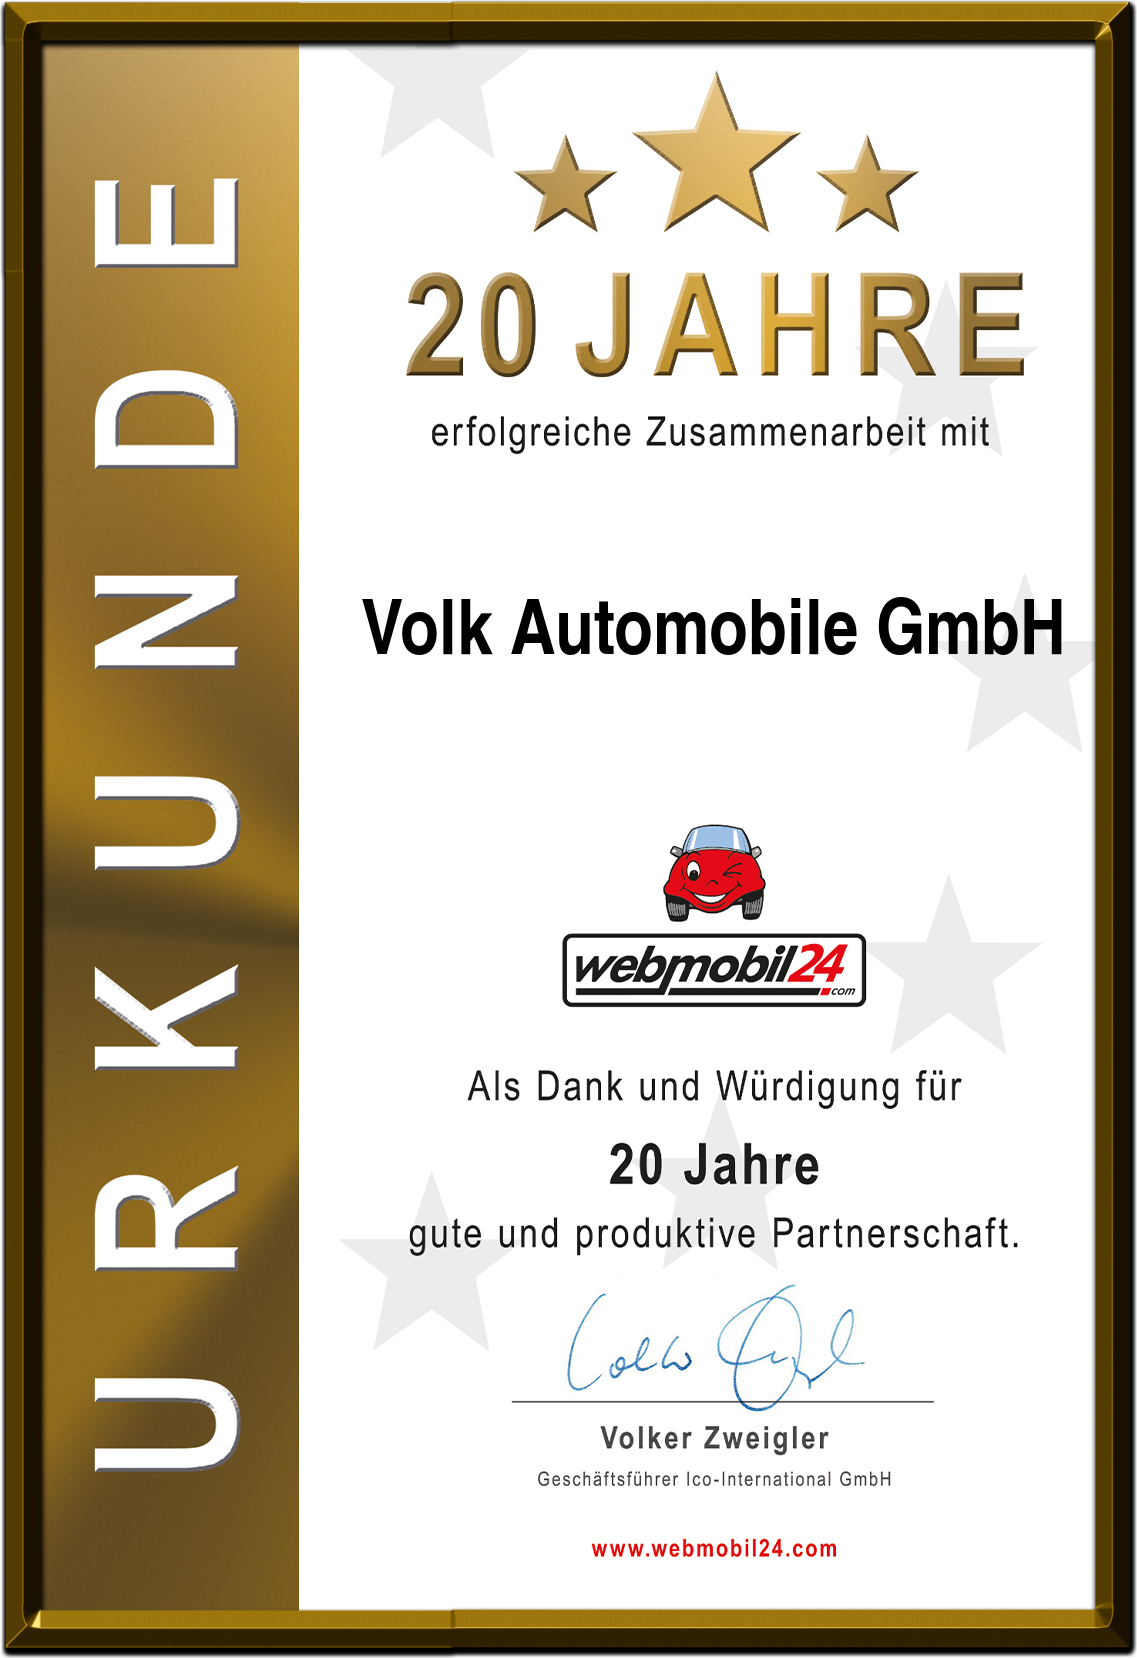 Volk Automobile GmbH